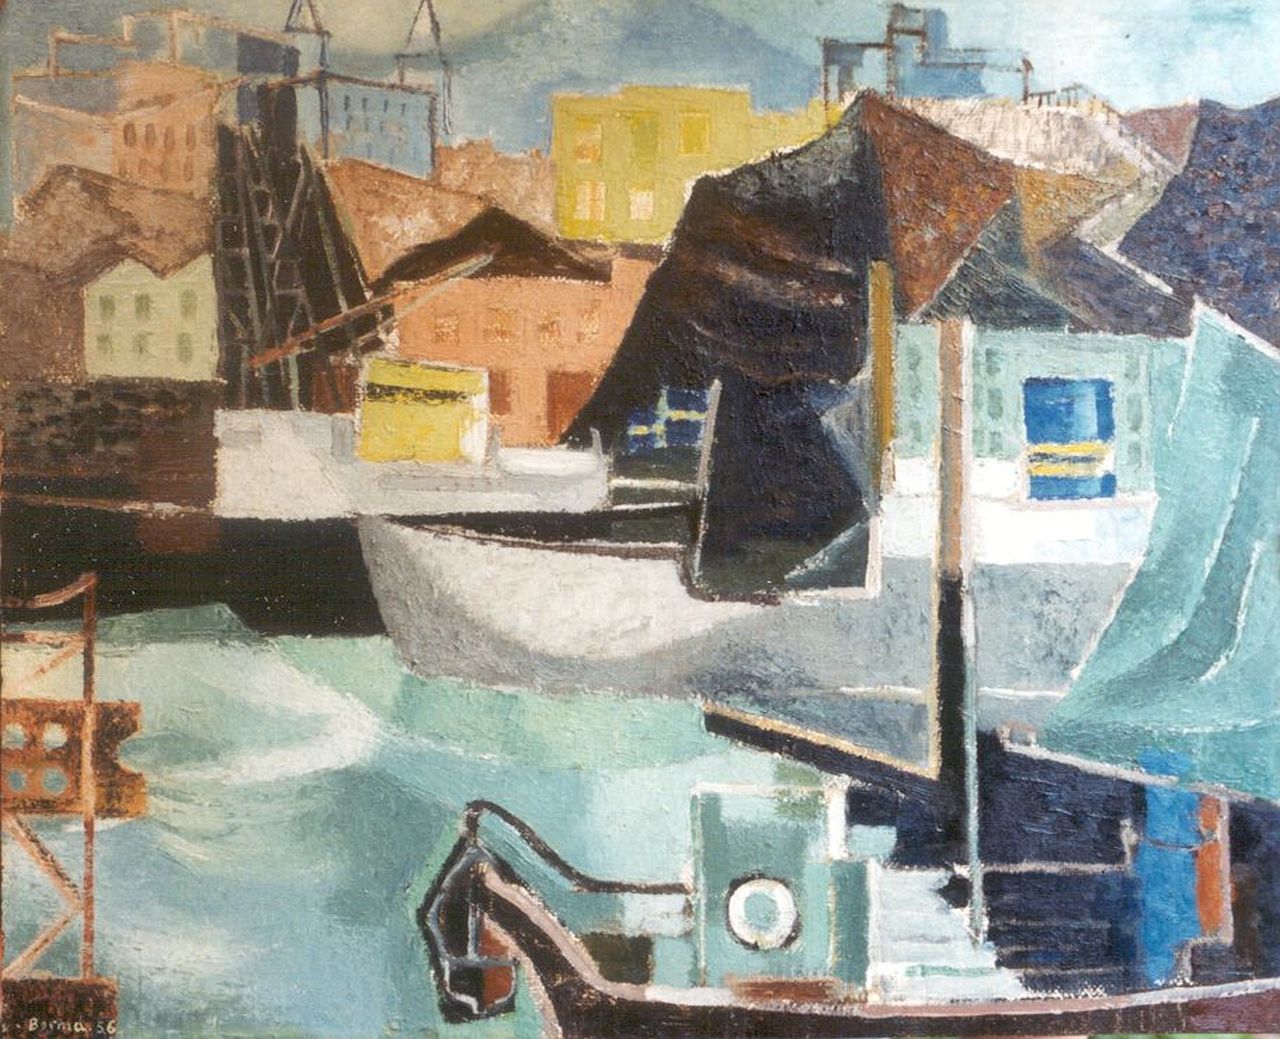 Bosma W.  | Willem 'Wim' Bosma, Compositie haven Göteborg, olieverf op board 49,5 x 60,9 cm, gesigneerd linksonder en gedateerd '56